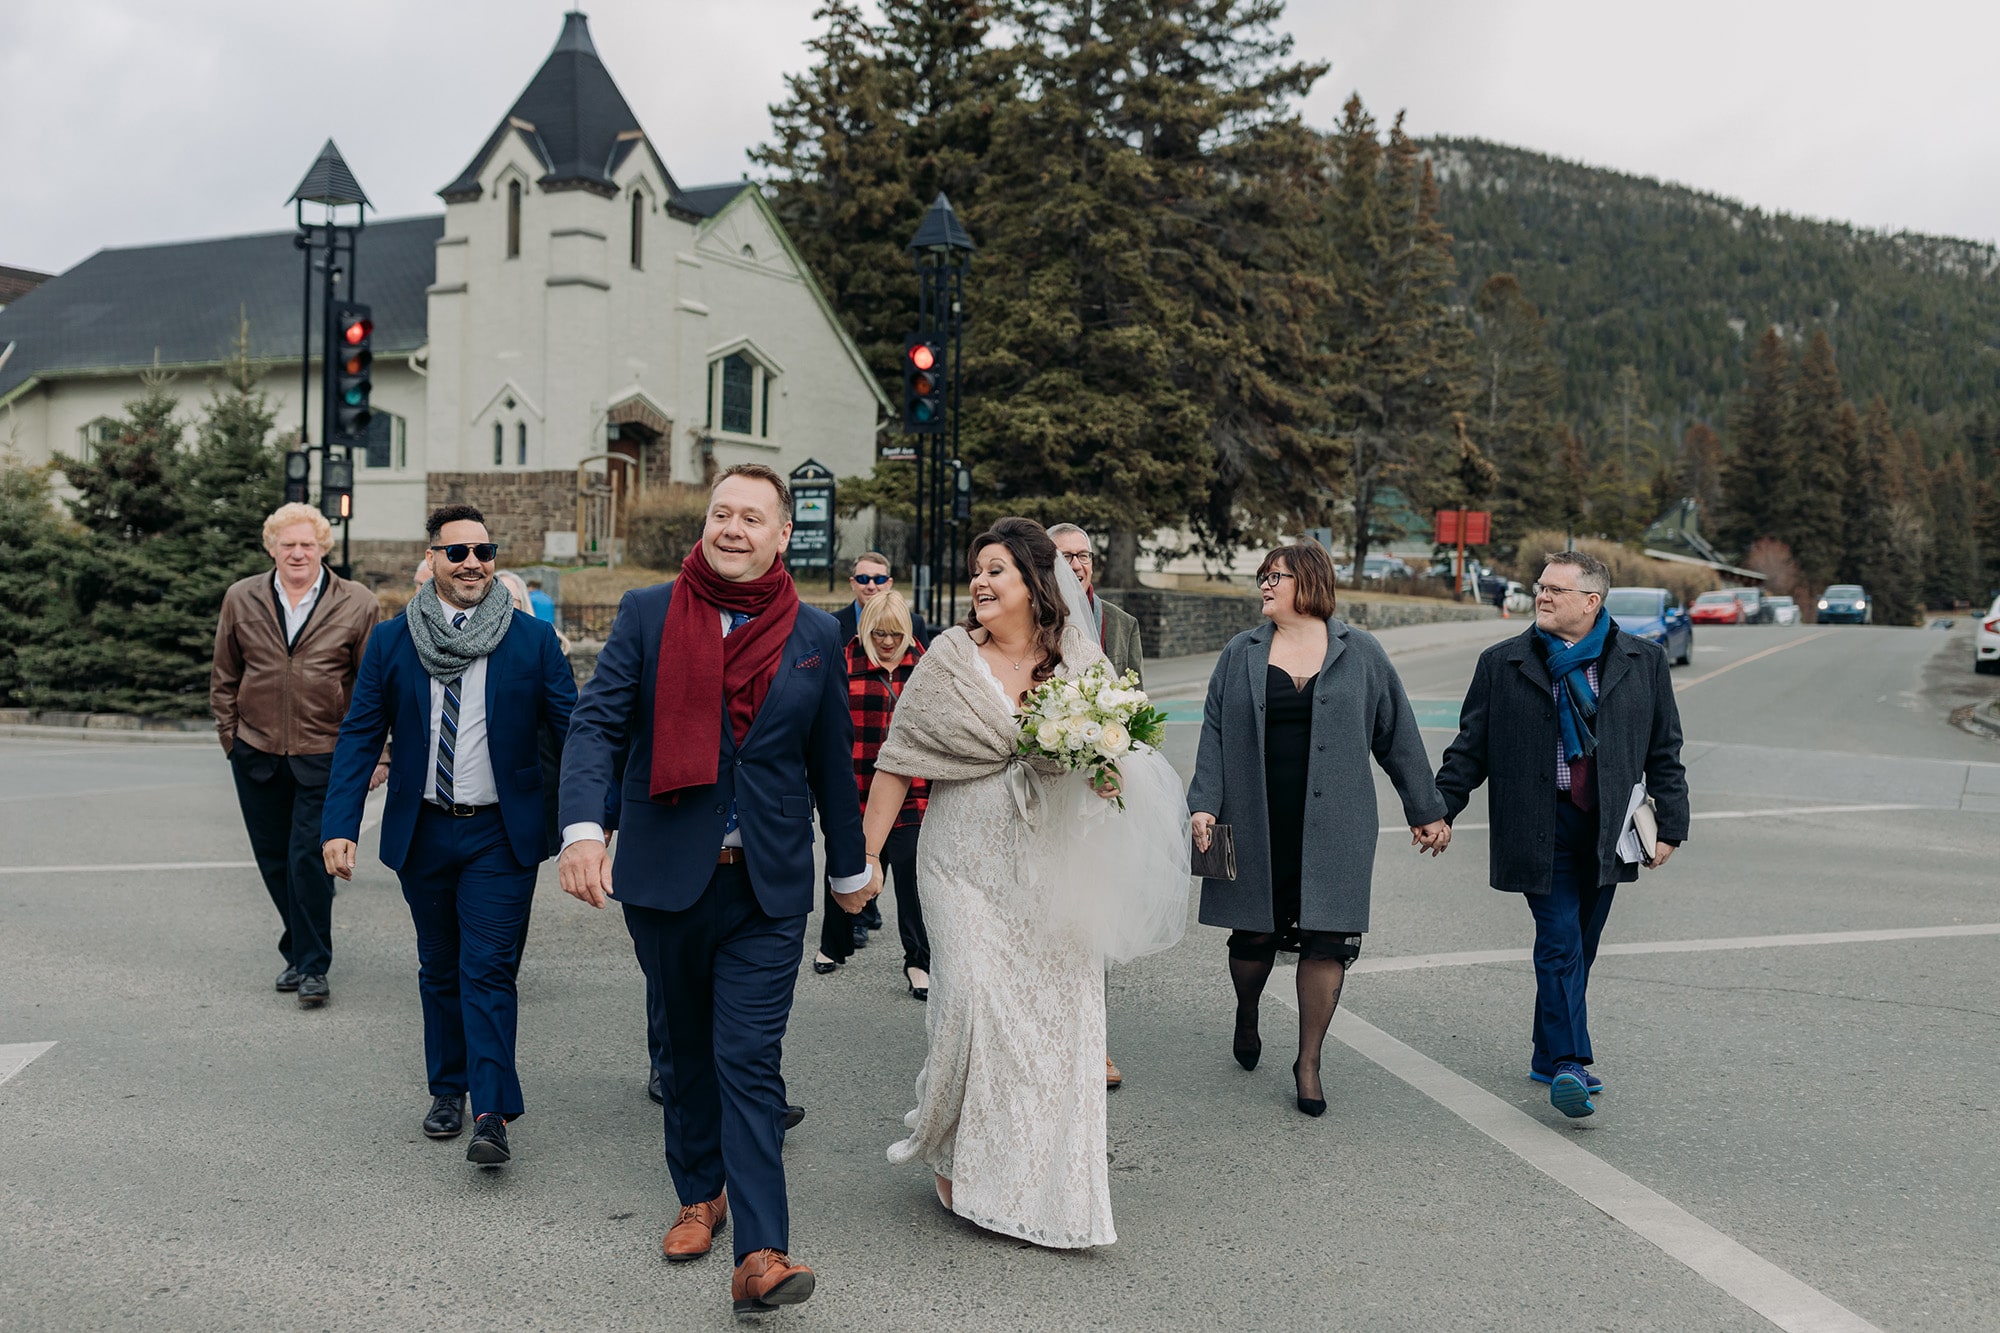 Banff wedding parade stroll through town